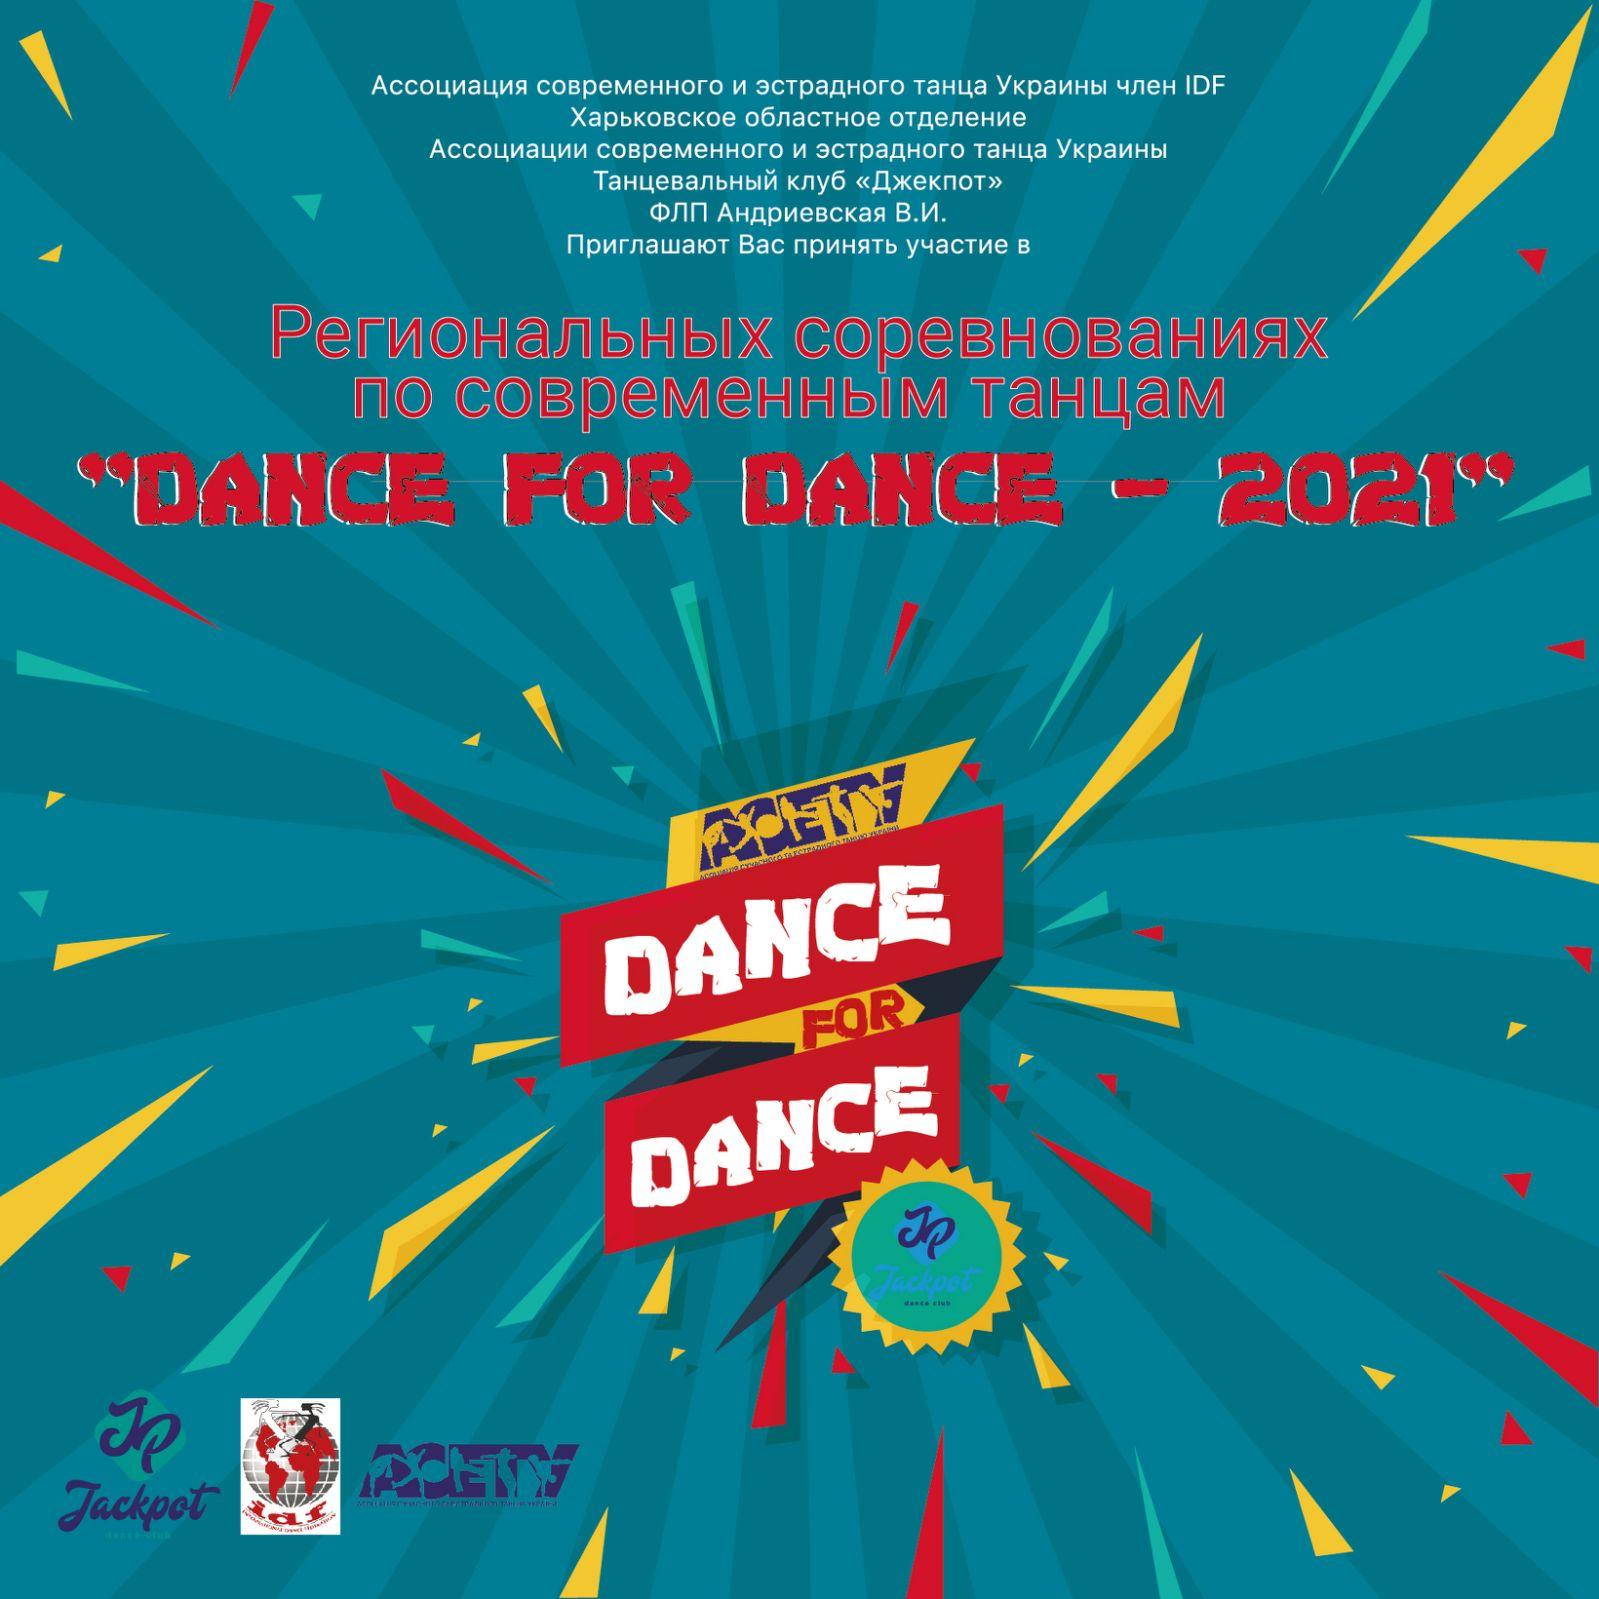 DANCE FOR DANCE, 18 апреля 2021, Харьков